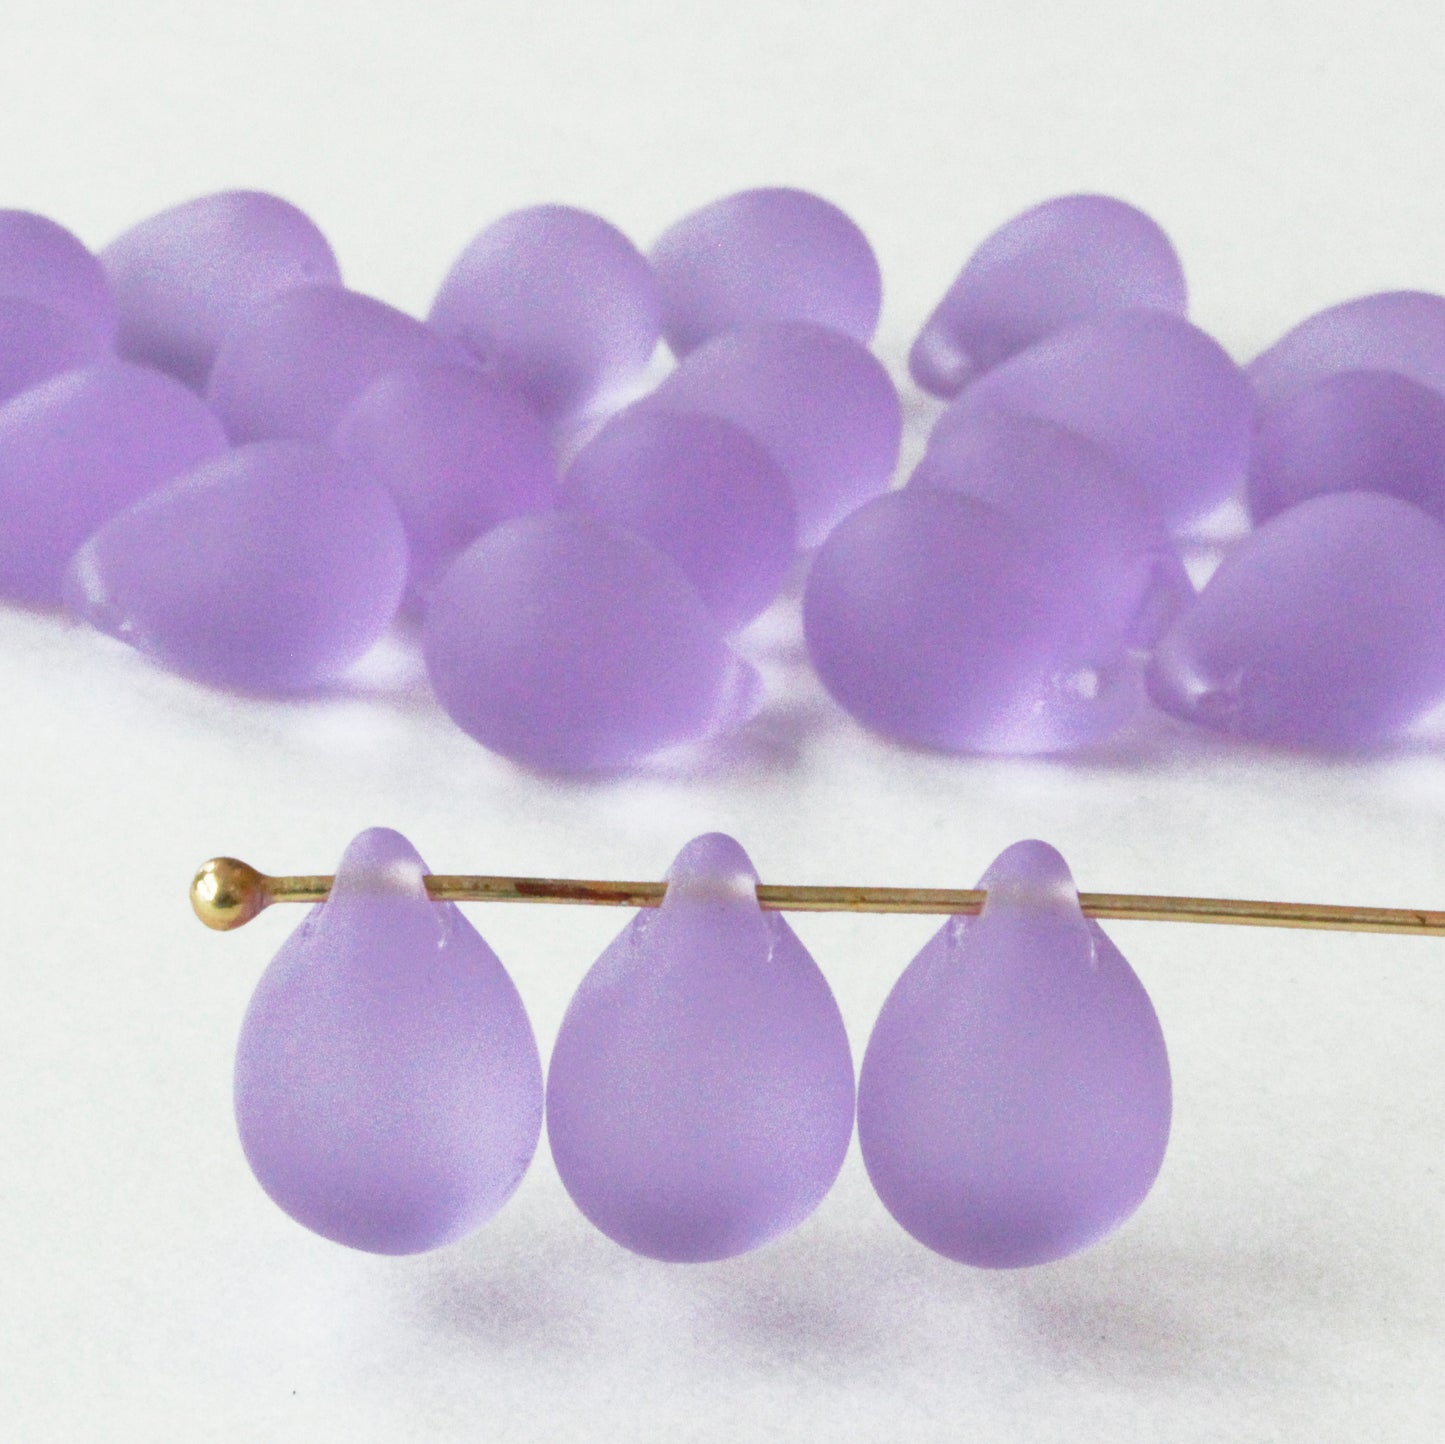 10x14mm Glass Teardrop Beads - Lavender Matte